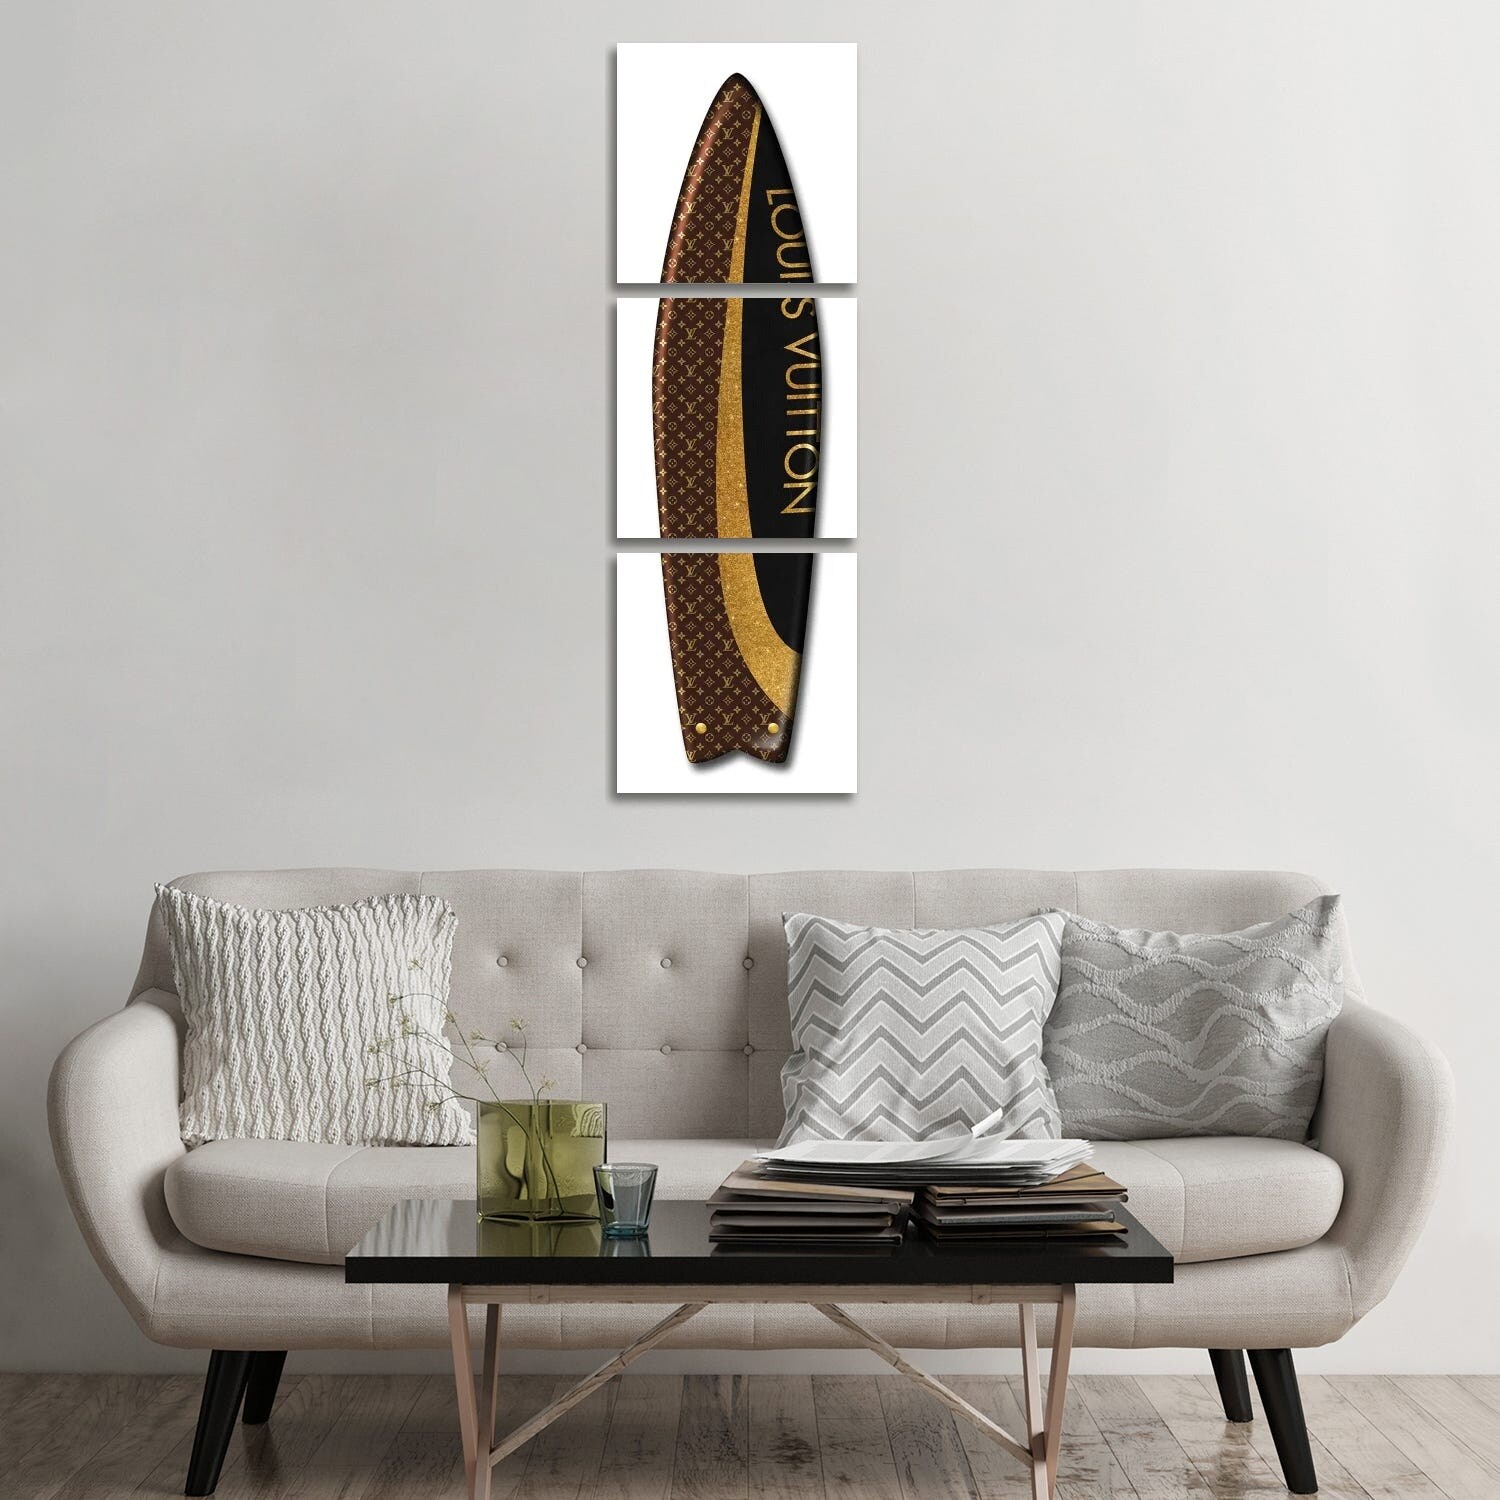 Modern Surfboard - Set of 3 - Art Prints or Canvases